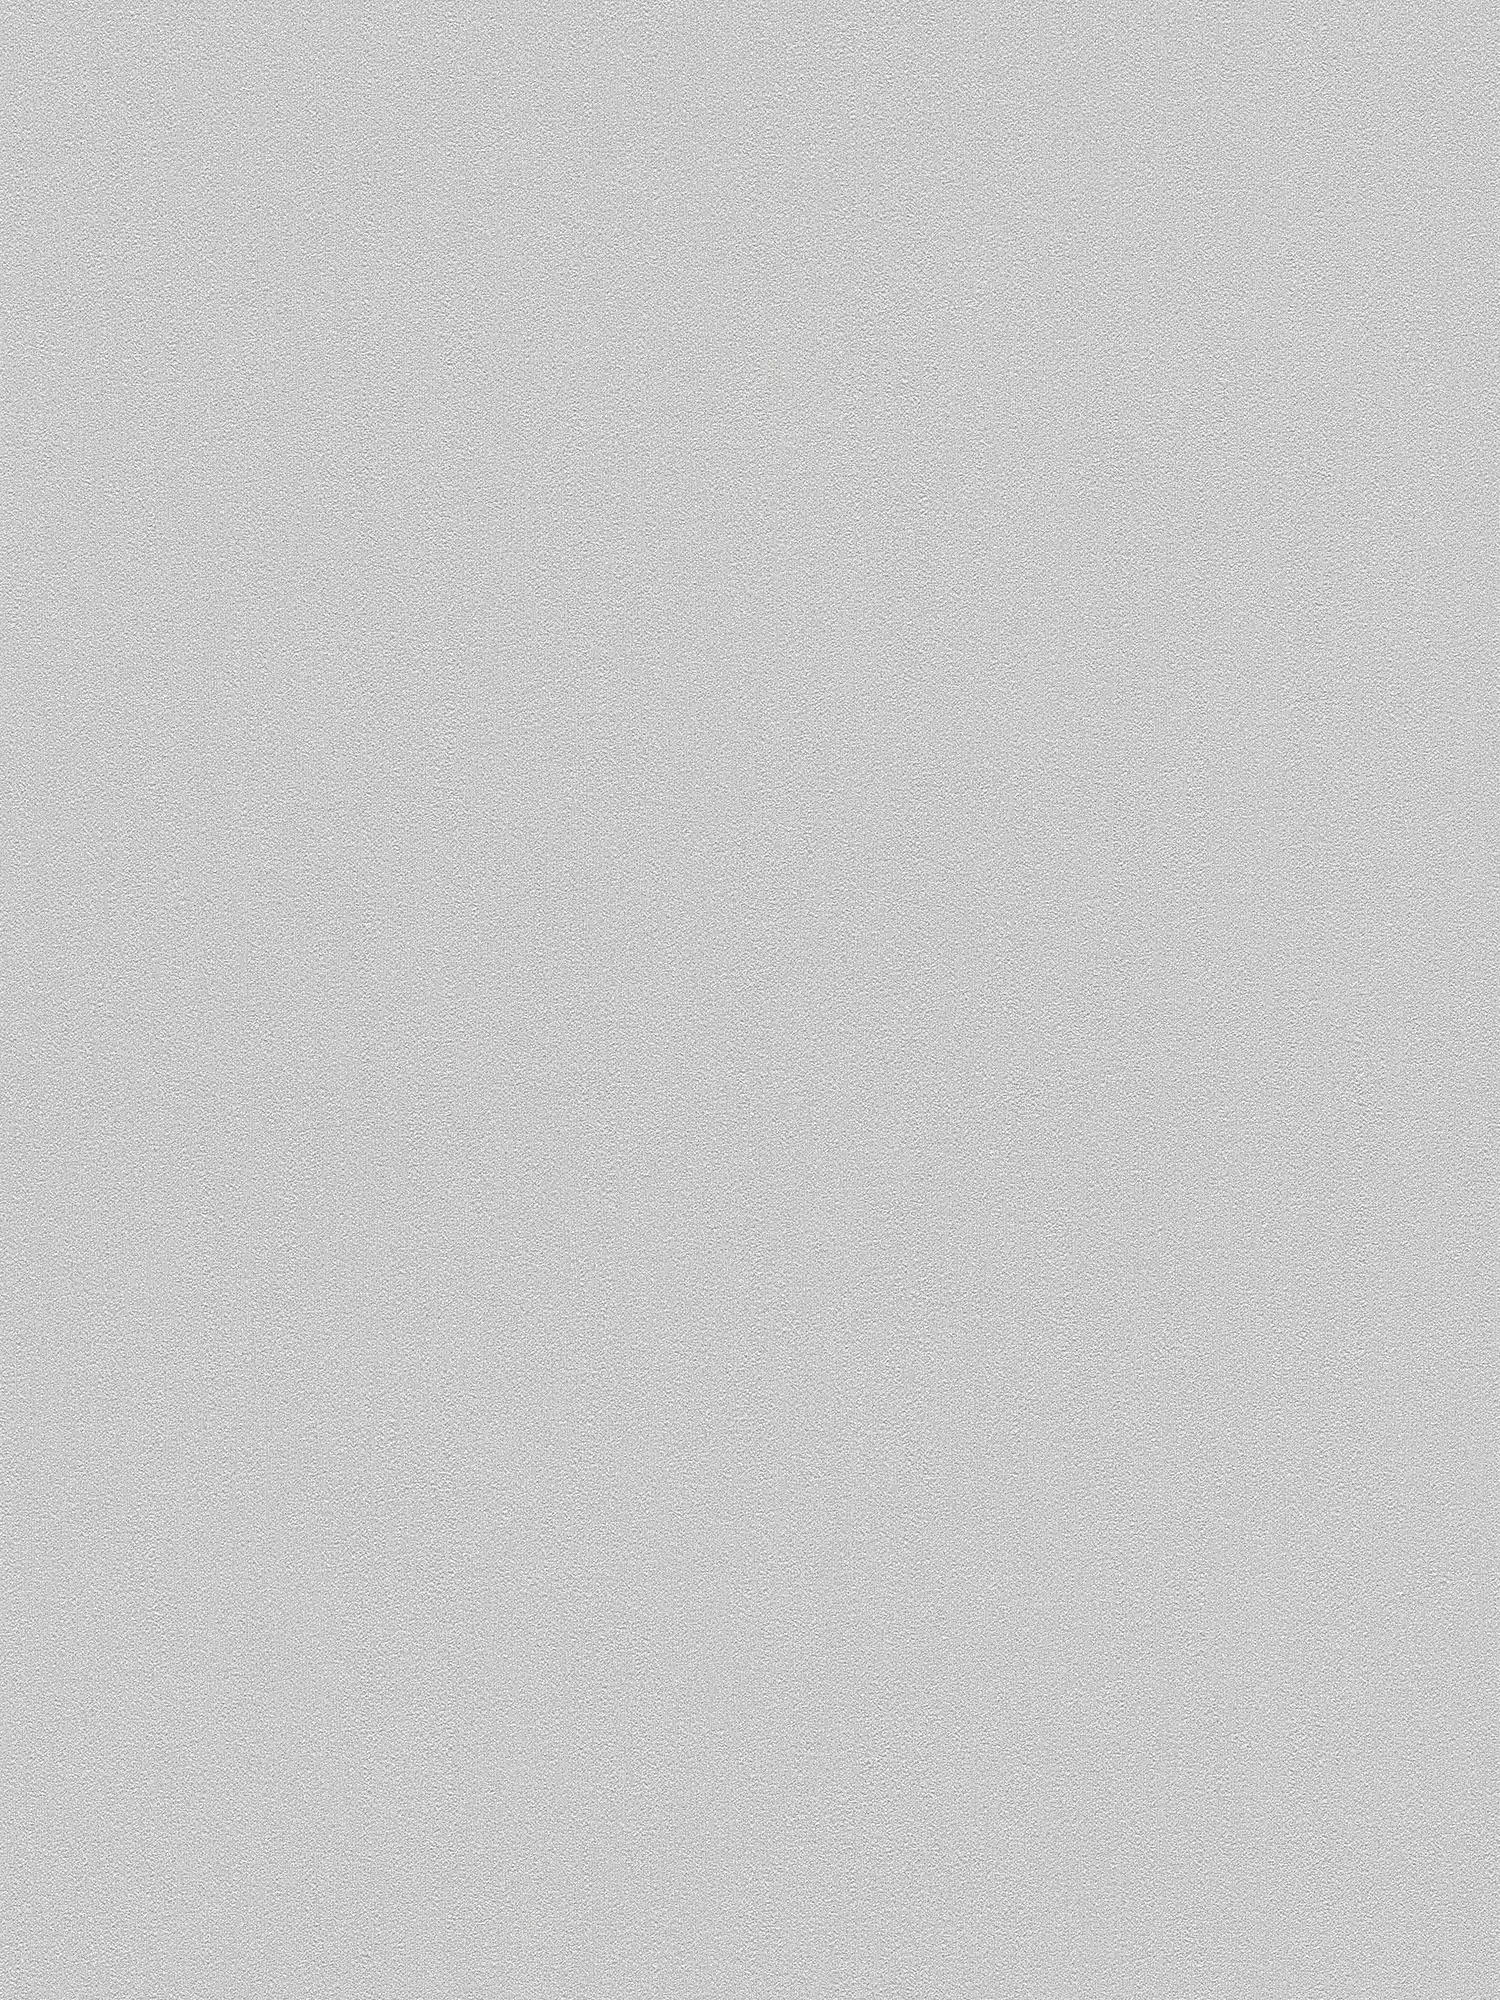 Karl LAGERFELD Tapete monochrom mit Textur – Grau
